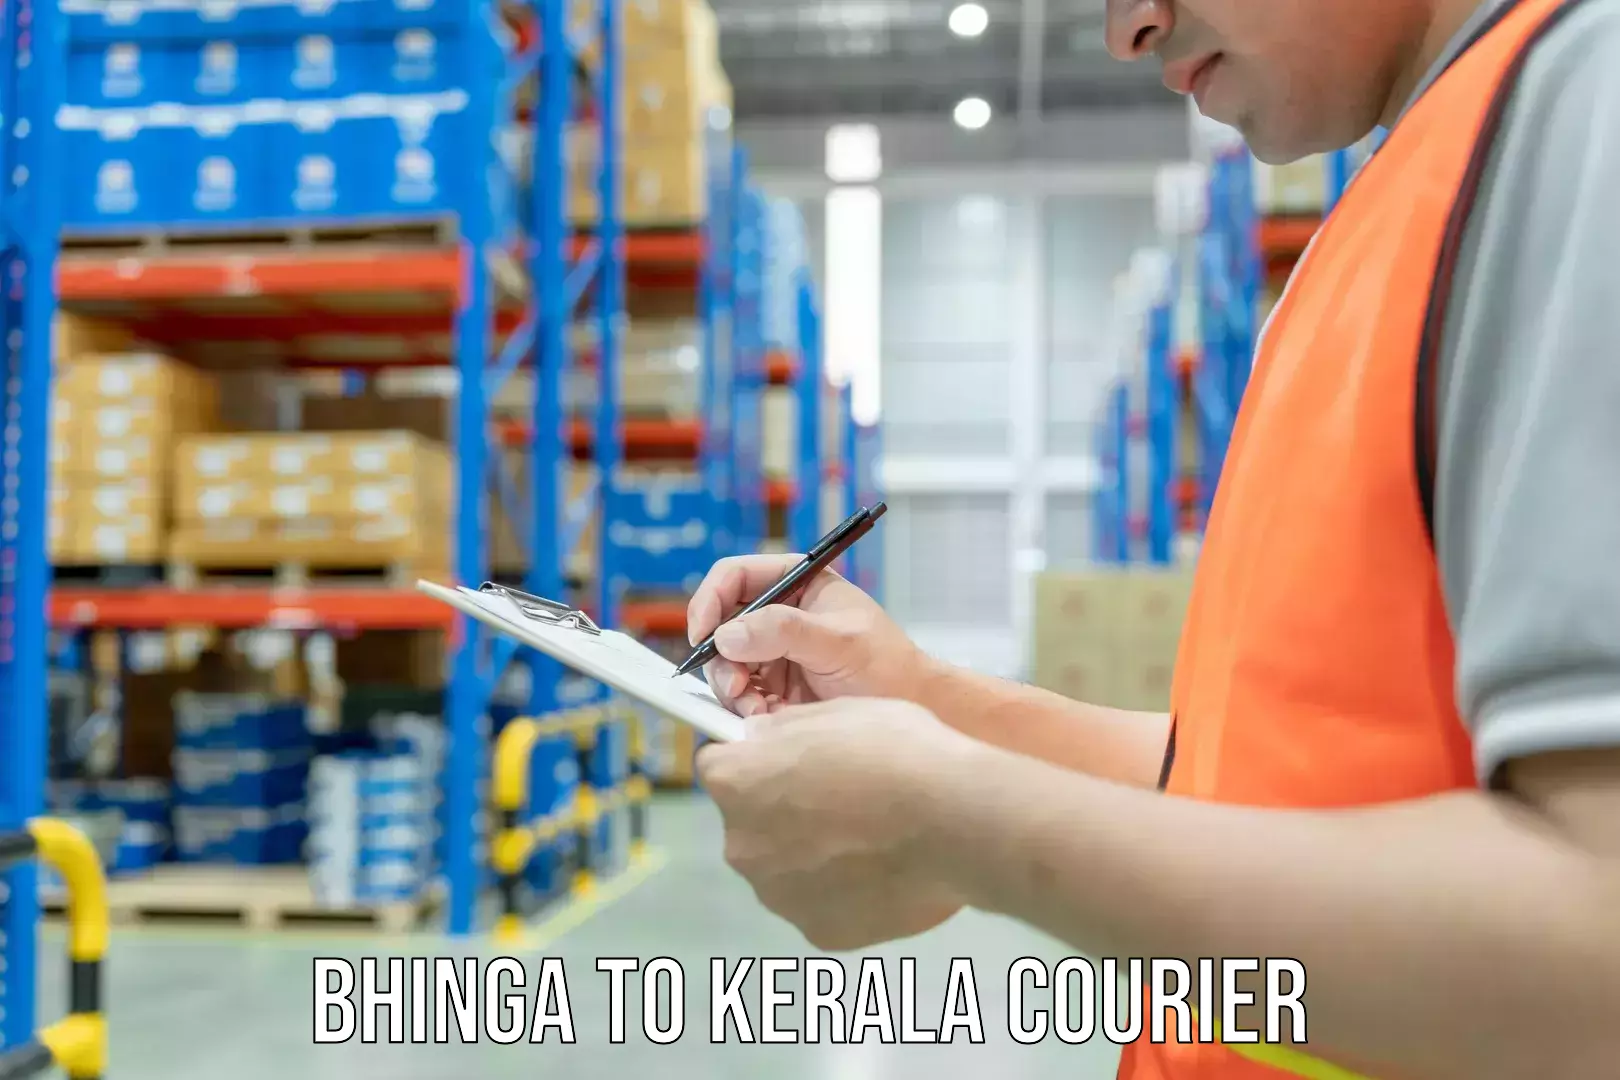 Courier app Bhinga to Kerala